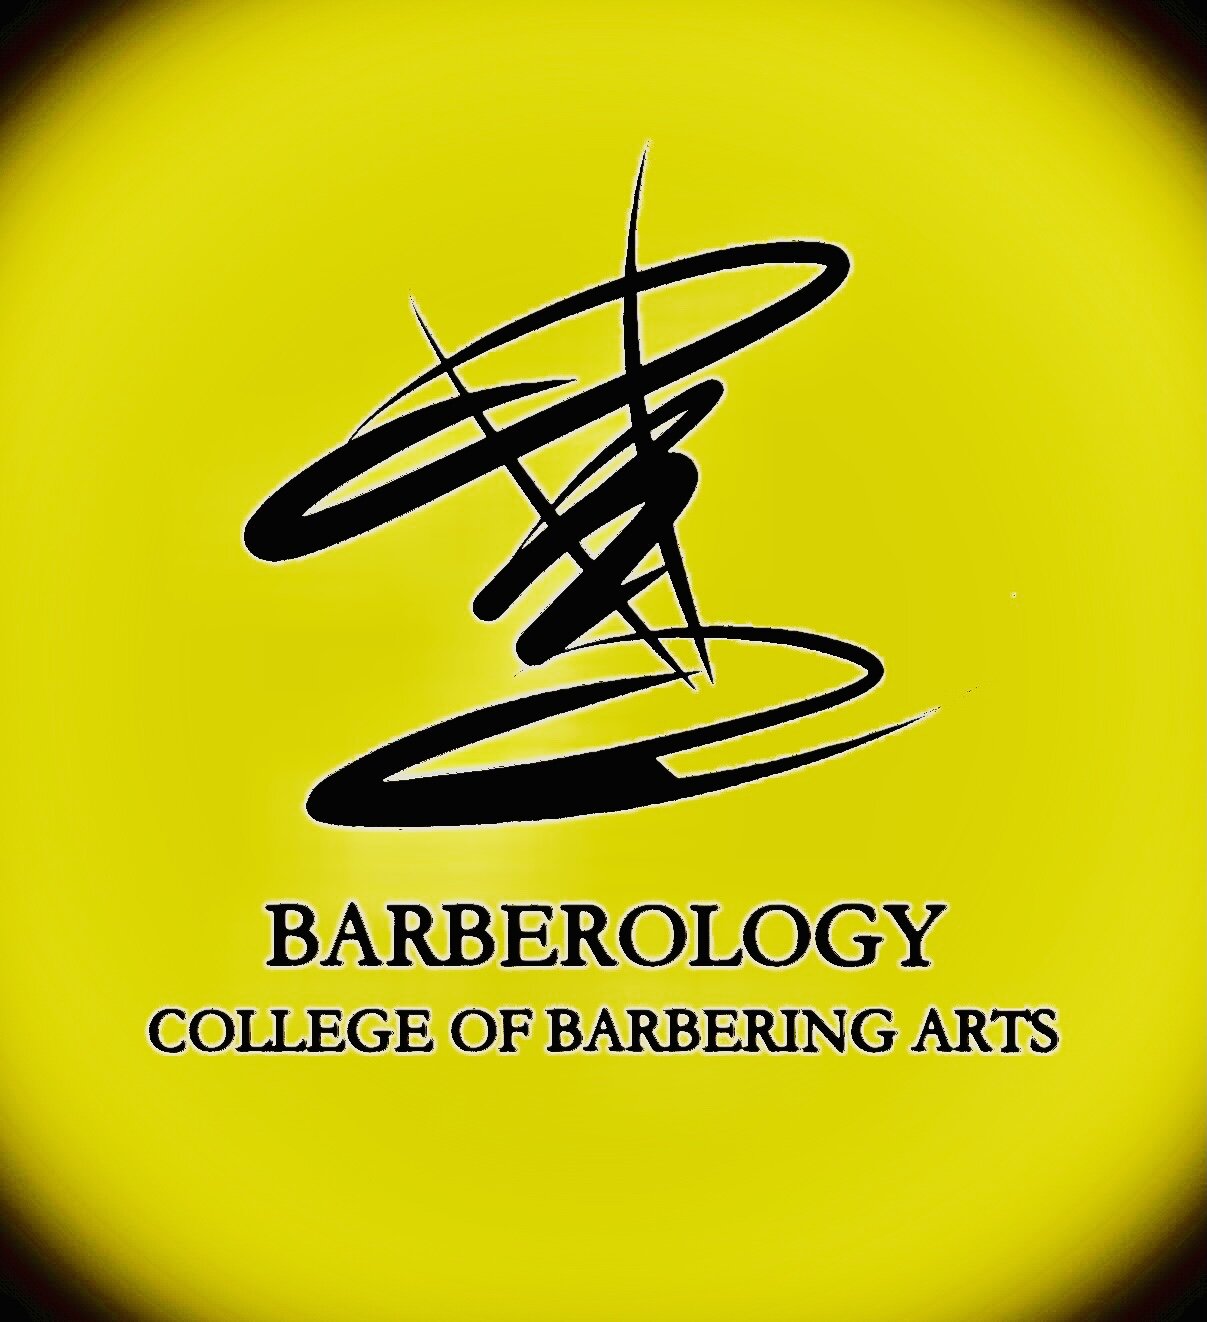 BARBEROLOGY COLLEGE OF BARBERING ARTS